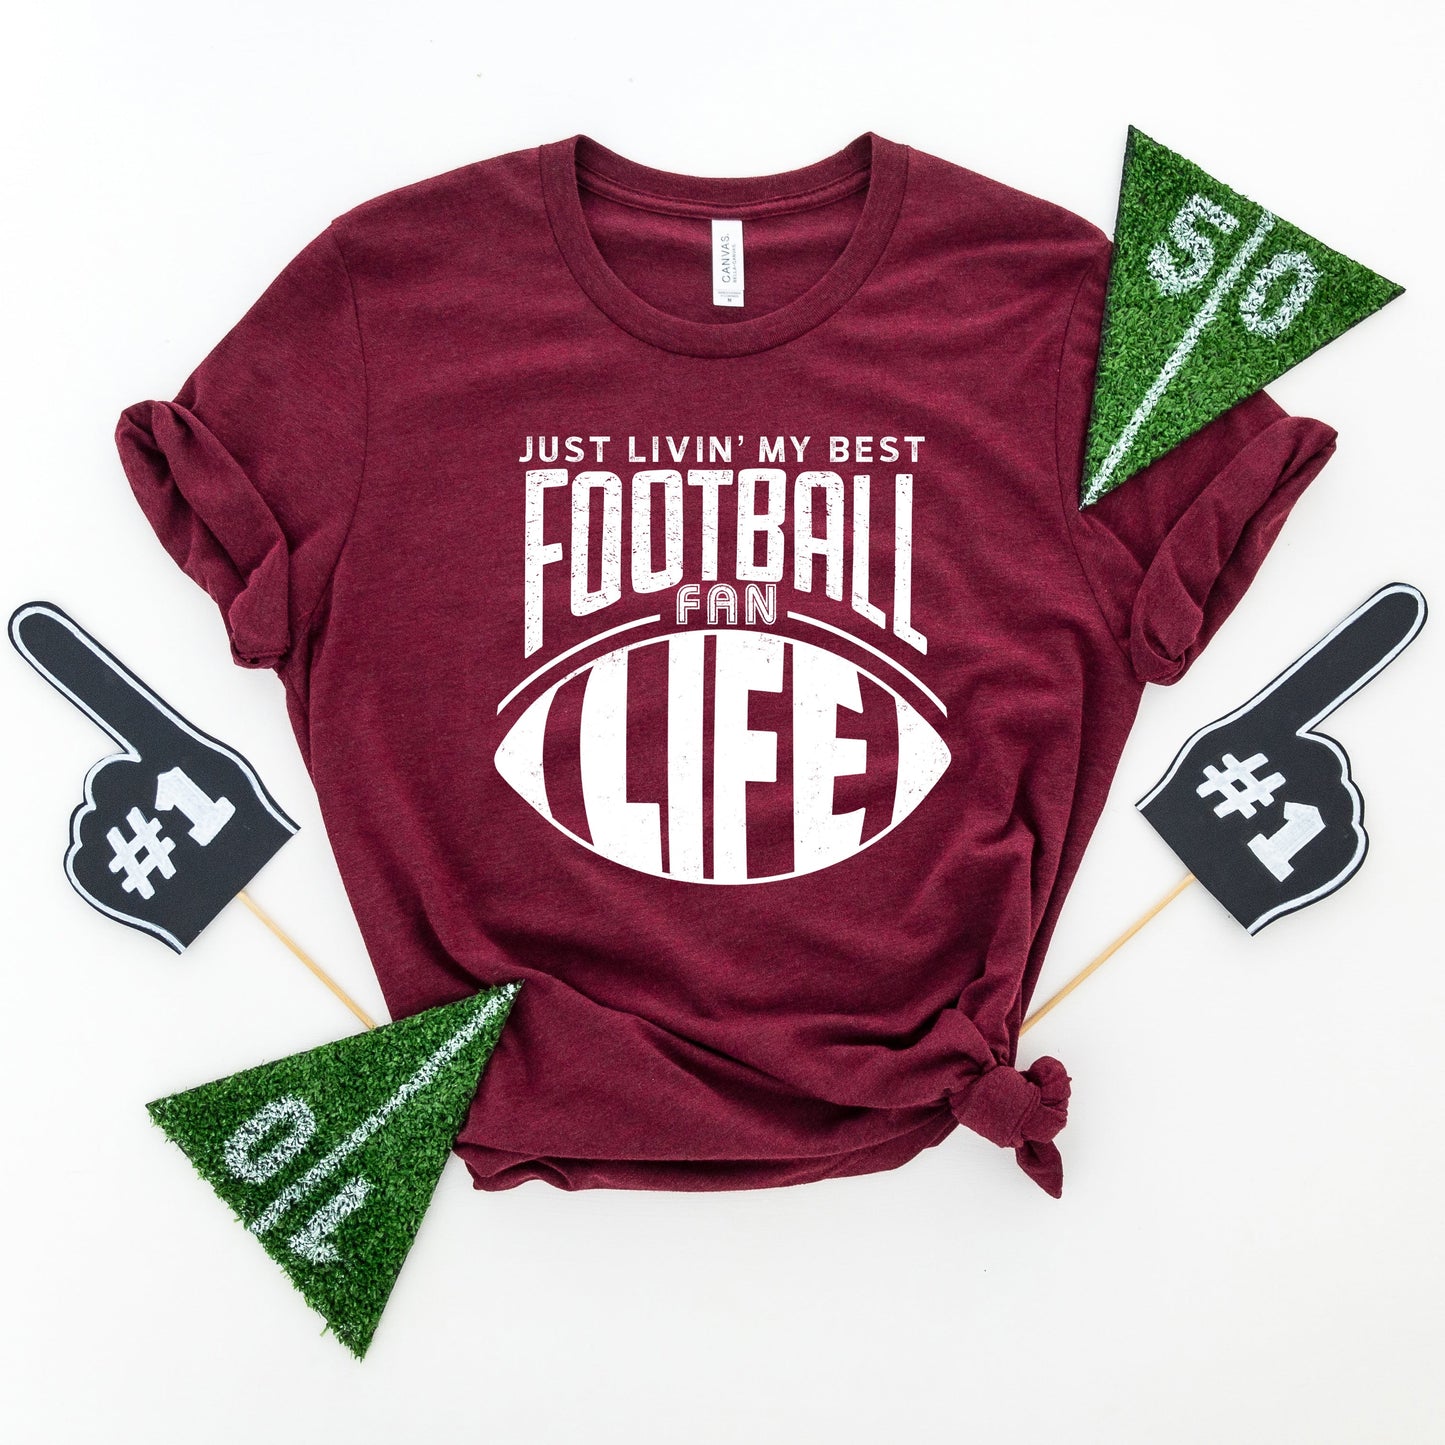 Just Livin' My Best Football Fan Life |Short Sleeve Crew Neck